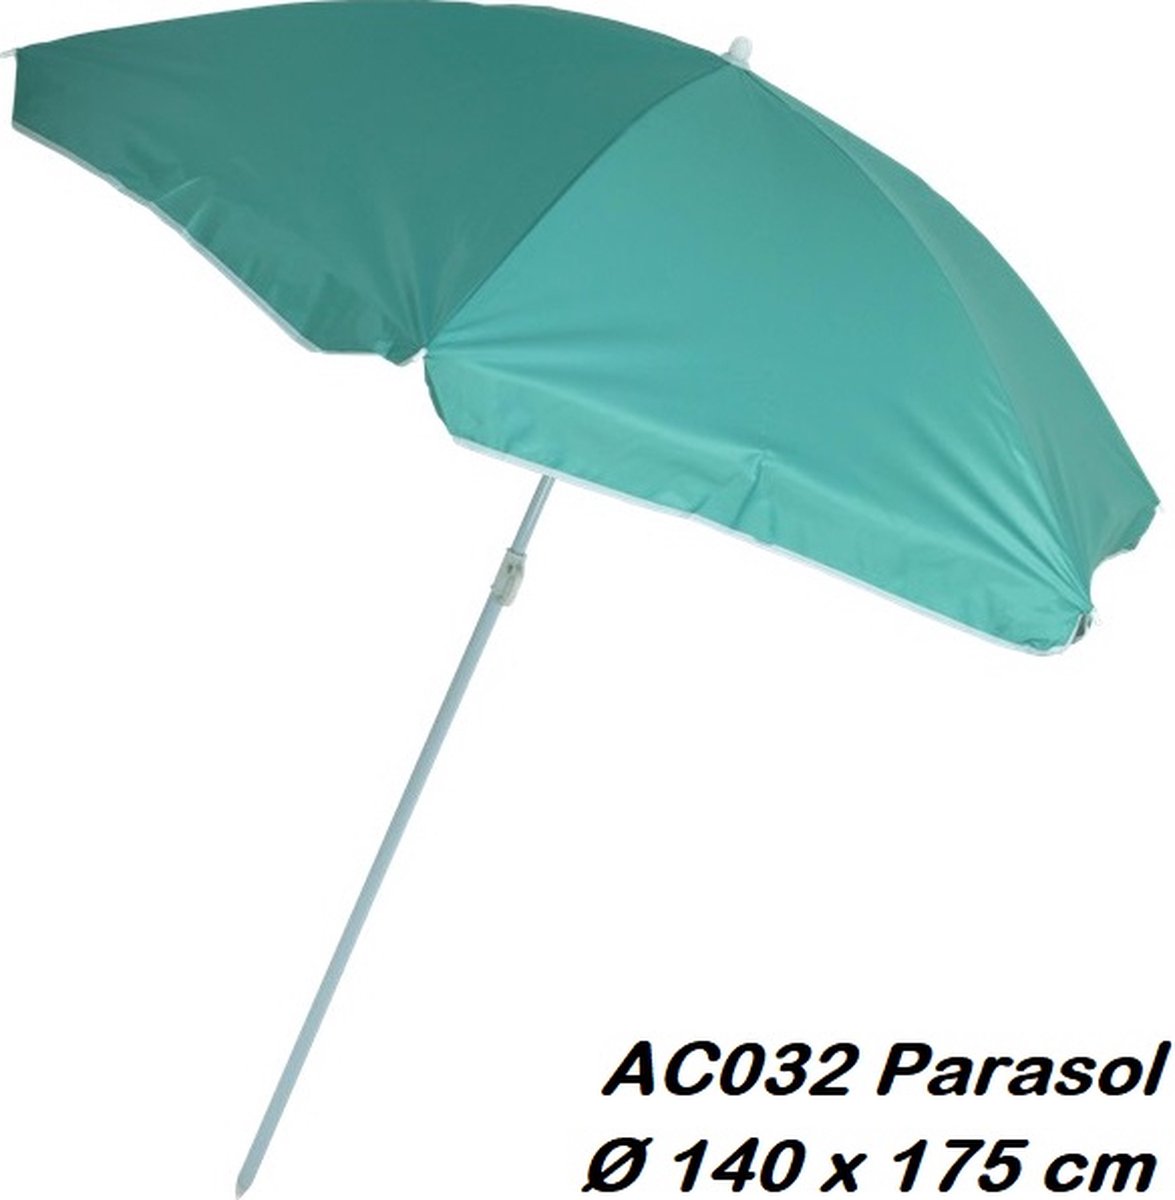 Power Escorts Parasol Ø 140 x 175 cm Groen/Cyan